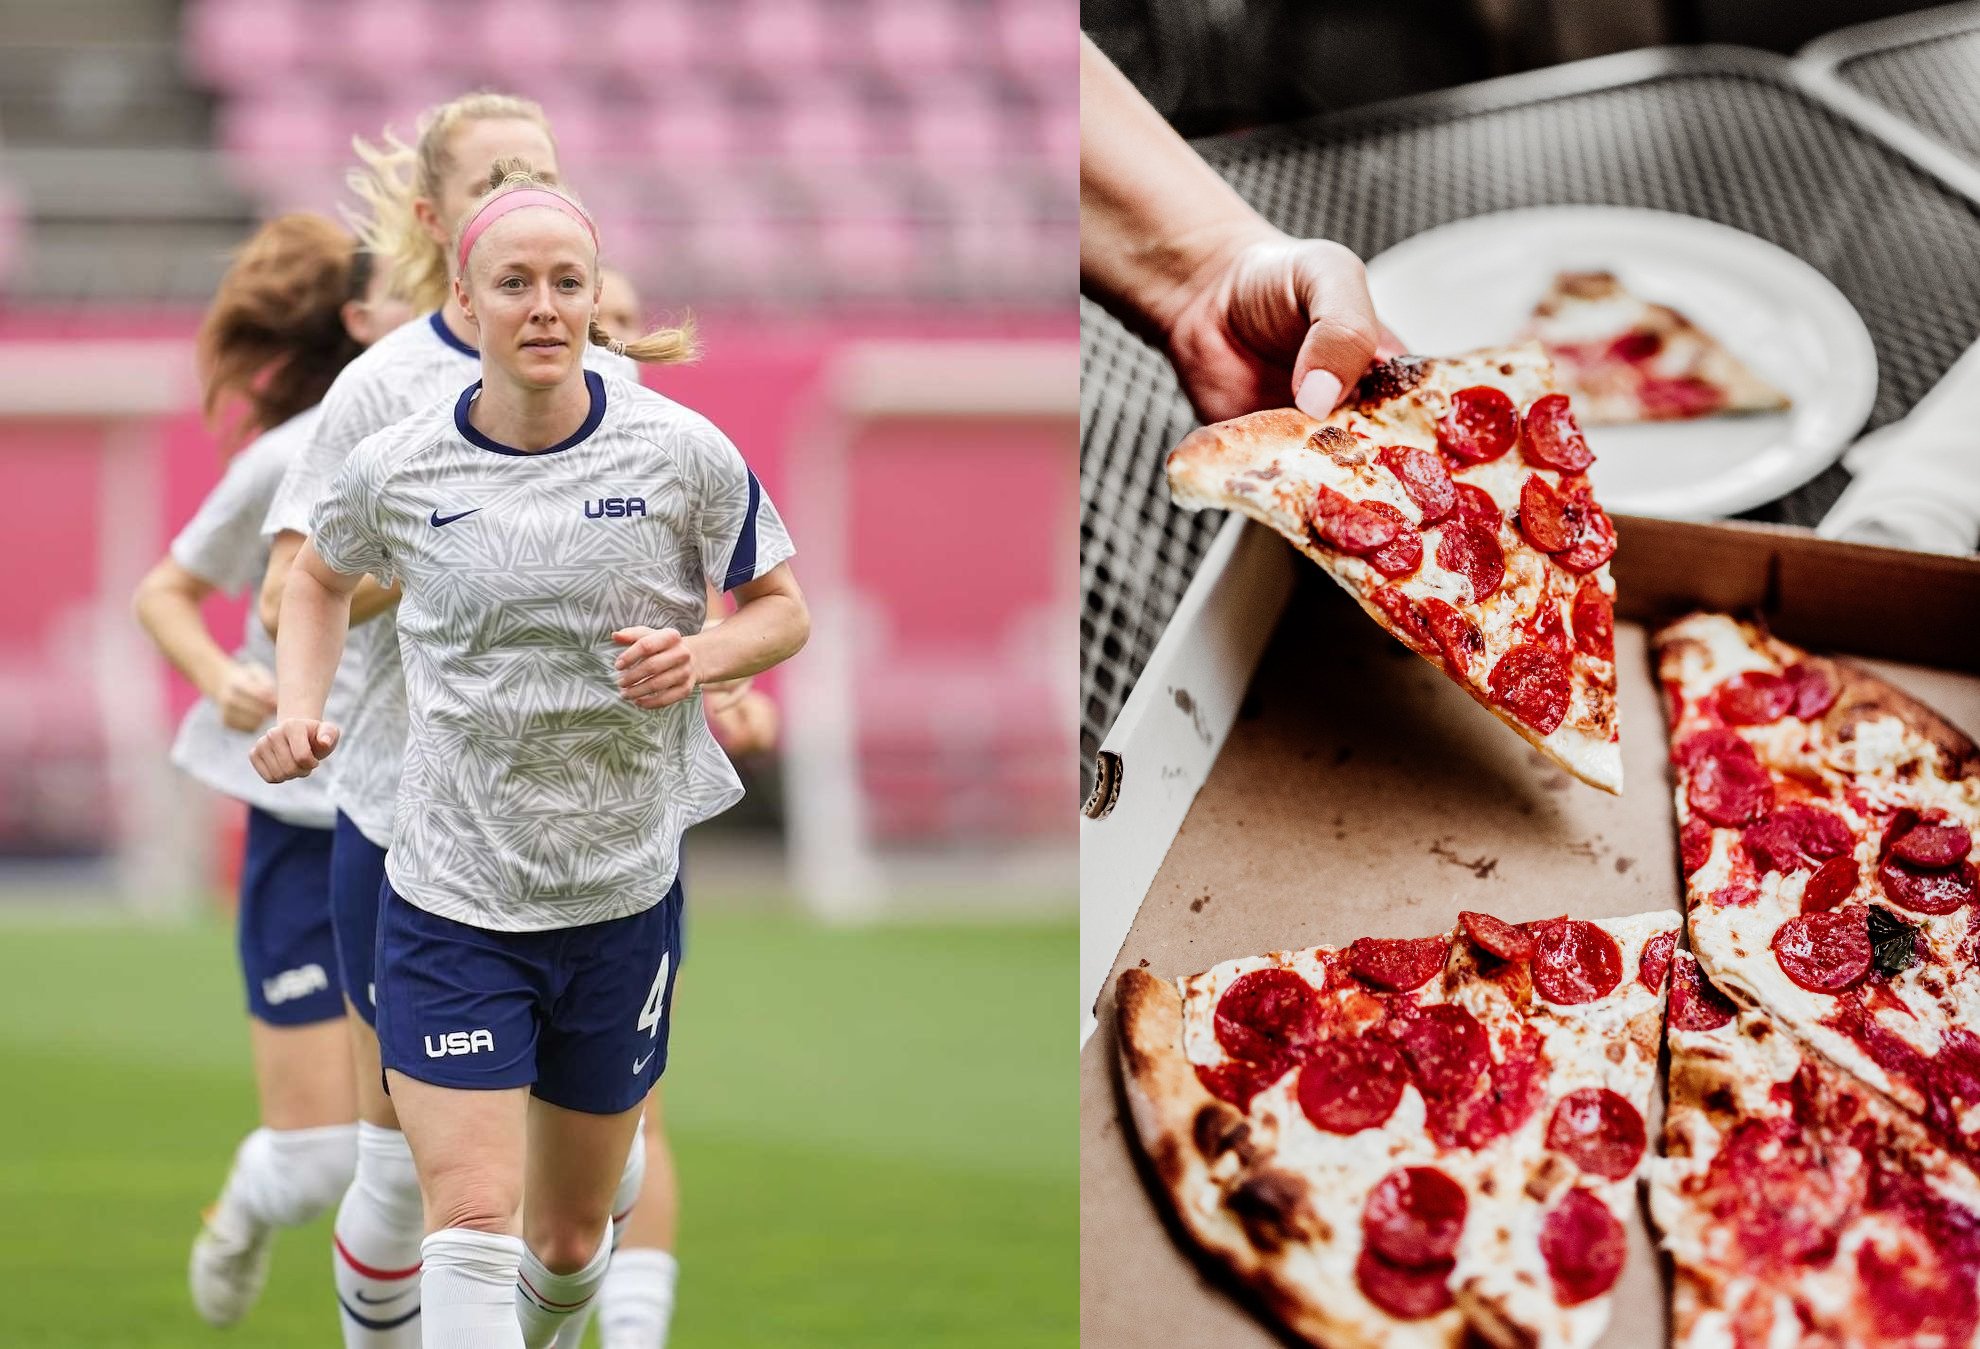 USWNT players training alongside box of Pepperoni Pizza | Source: Instagram - Unsplash